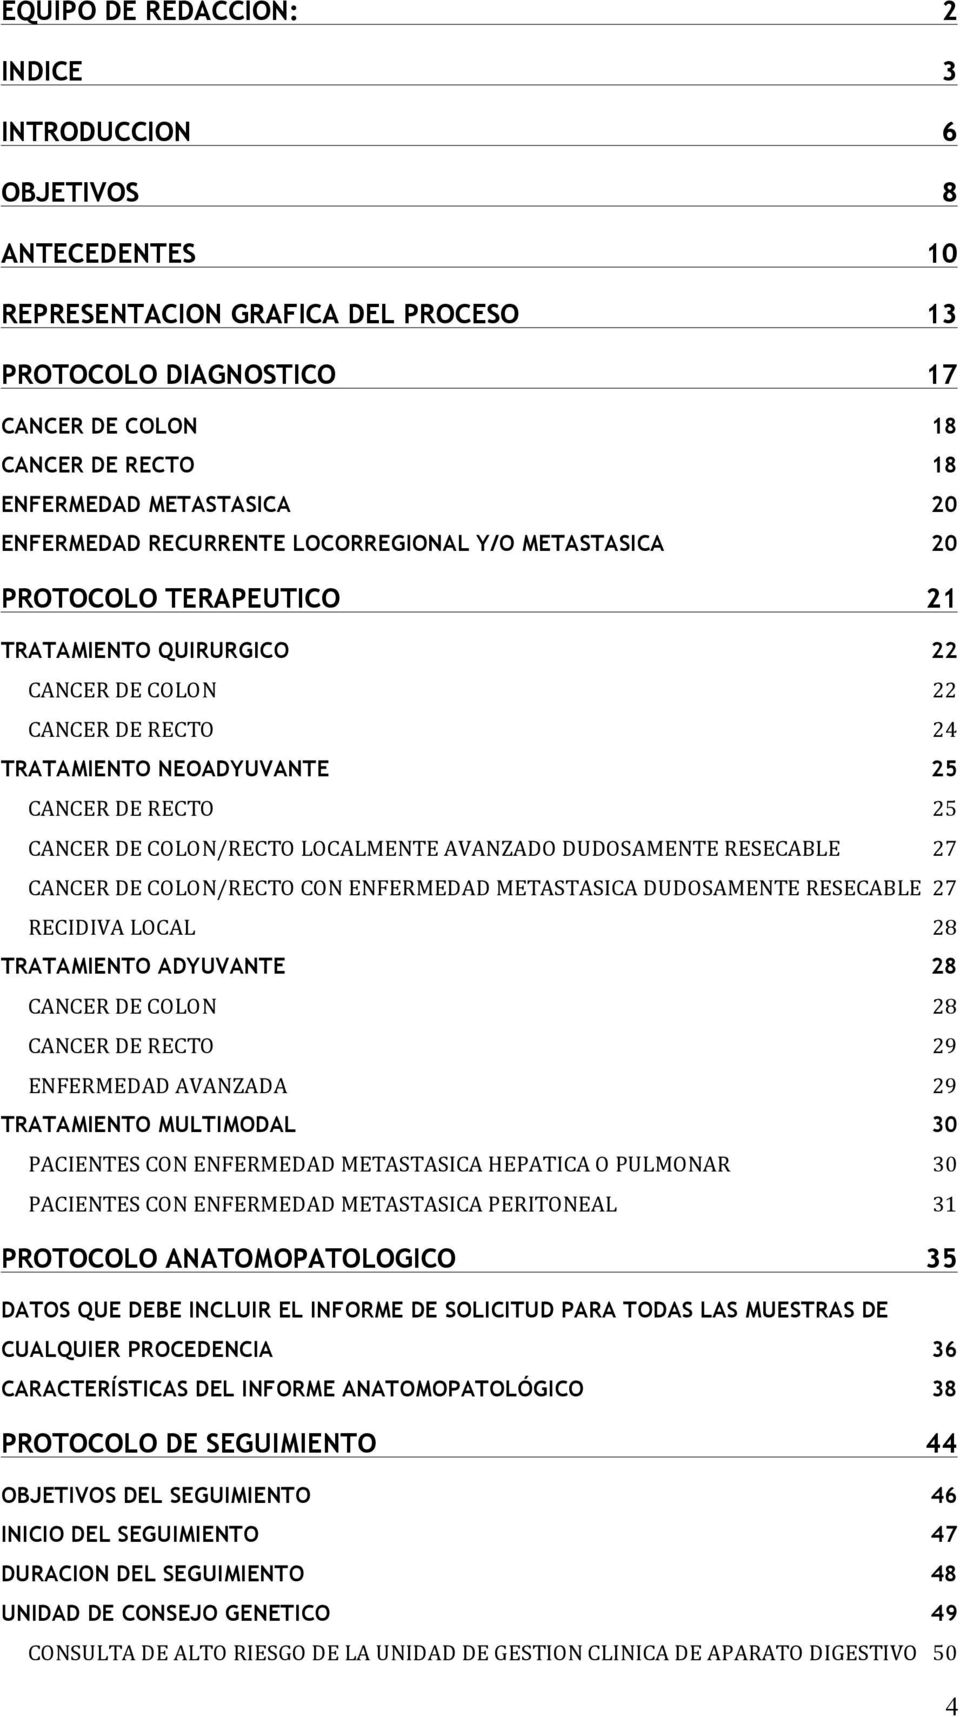 CANCER DE COLON/RECTO LOCALMENTE AVANZADO DUDOSAMENTE RESECABLE 27 CANCER DE COLON/RECTO CON ENFERMEDAD METASTASICA DUDOSAMENTE RESECABLE 27 RECIDIVA LOCAL 28 TRATAMIENTO ADYUVANTE 28 CANCER DE COLON